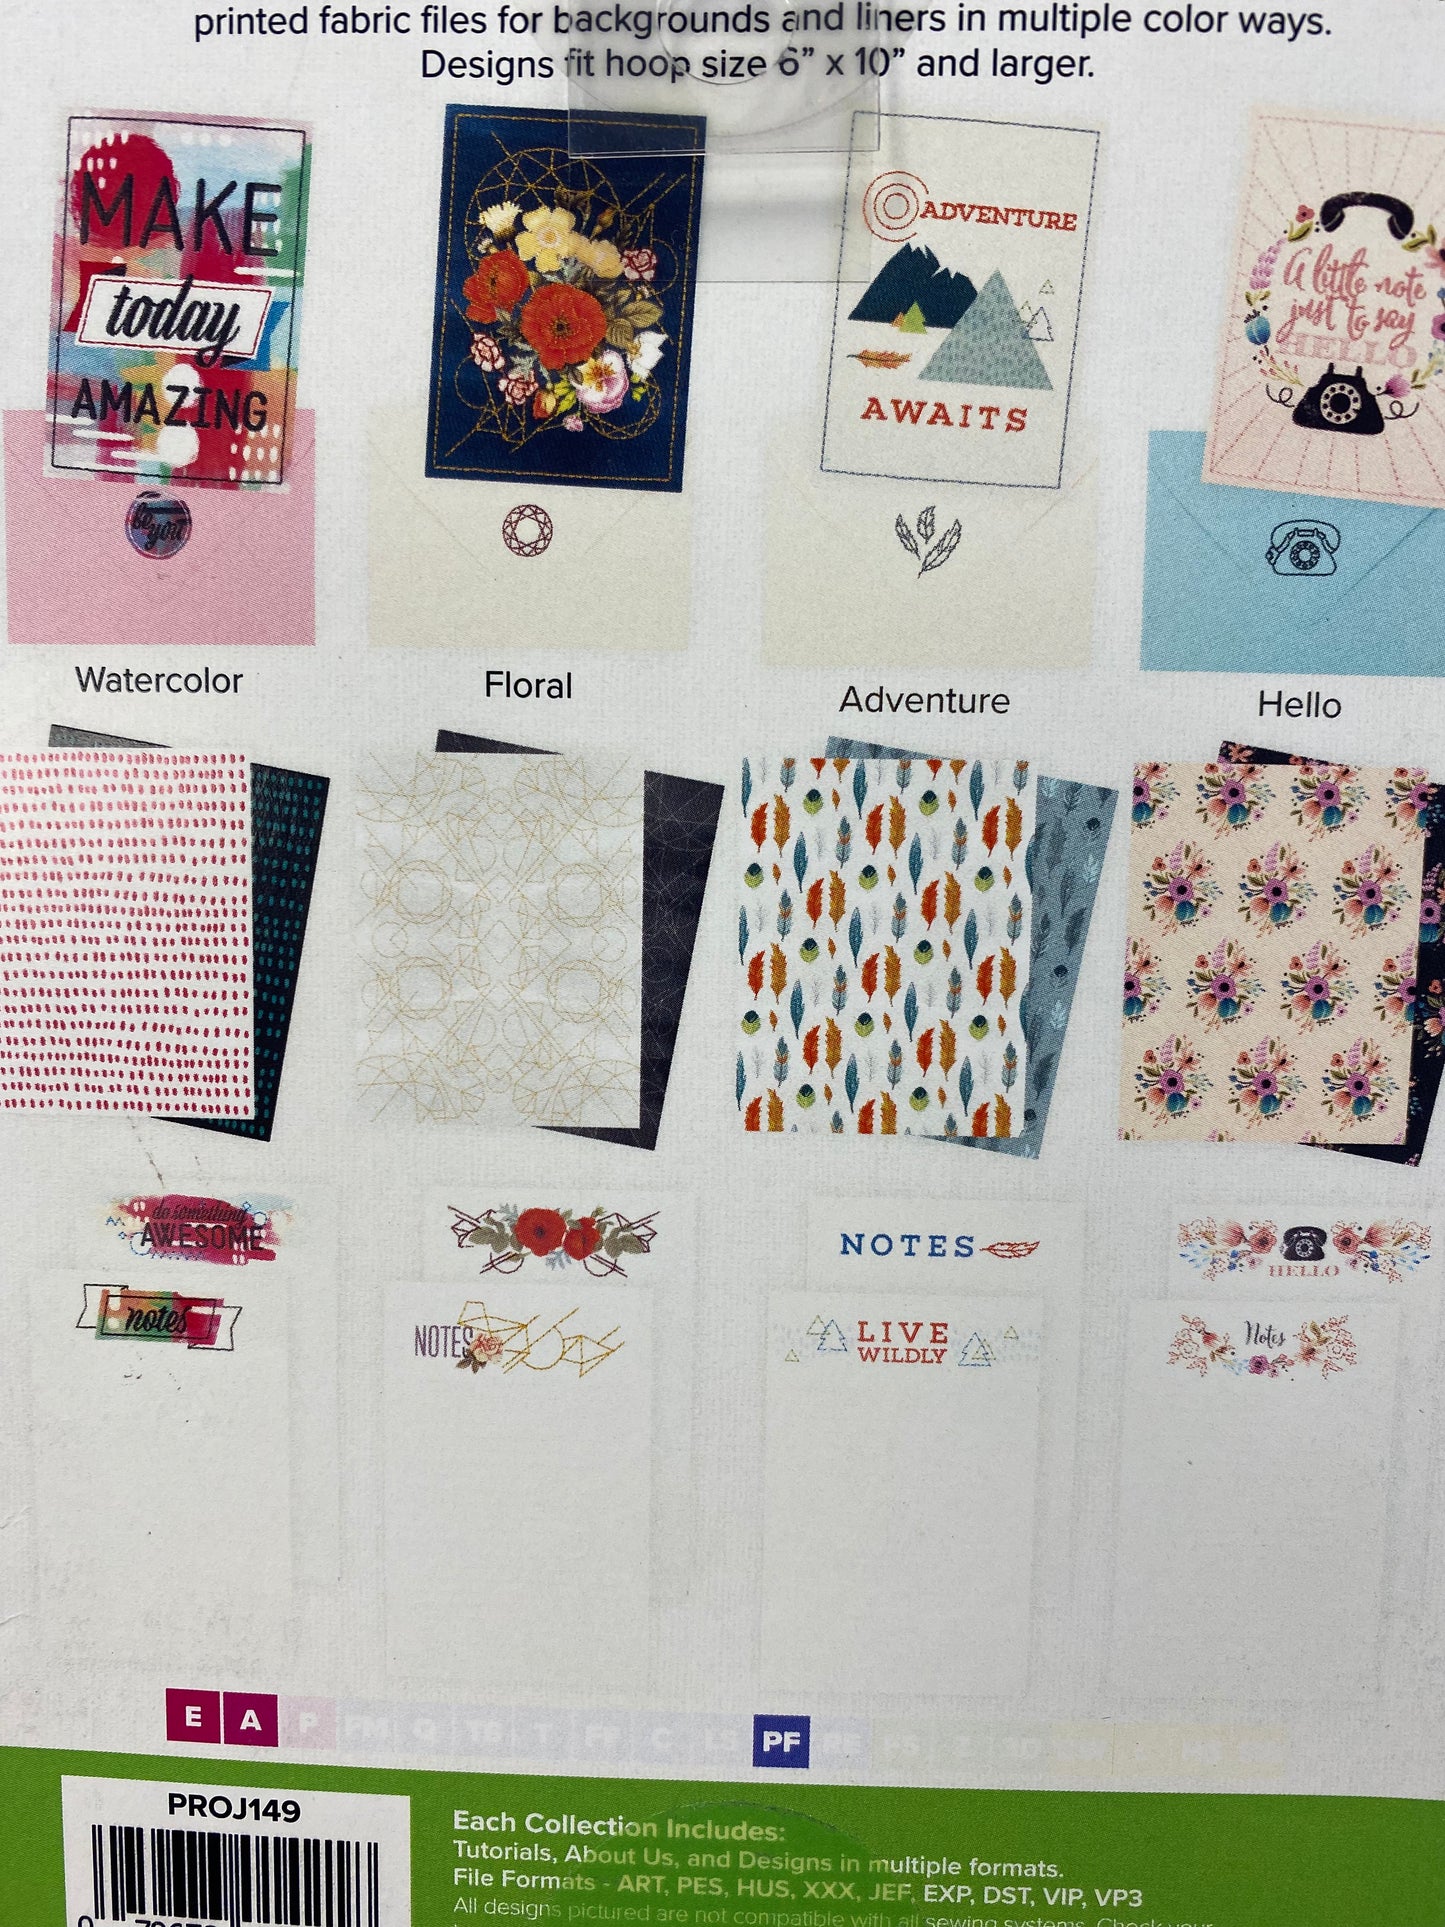 Printed Fabric Stationery by Anita Goodesign